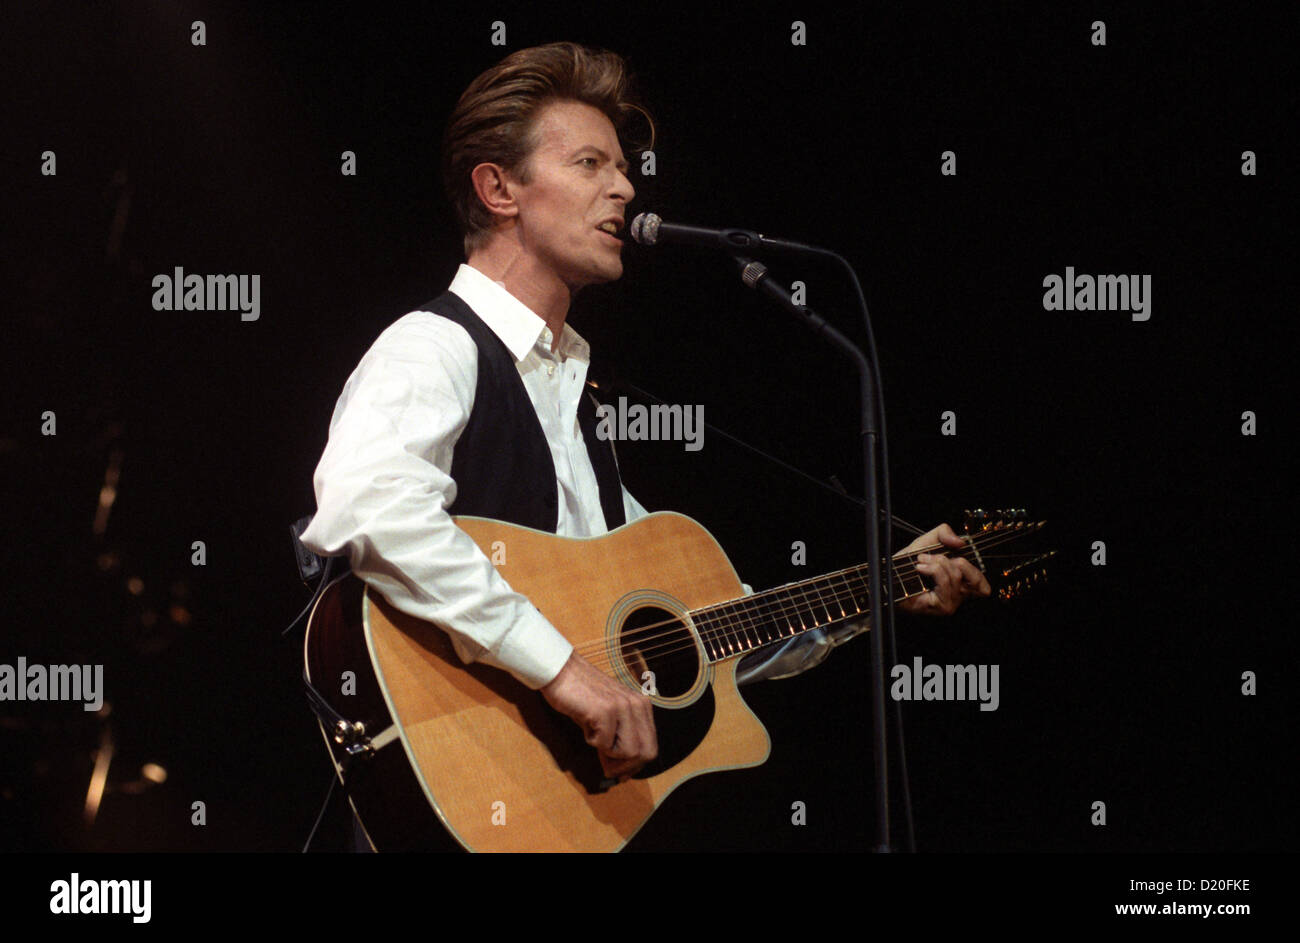 David Bowie in concert on 5 April 1990 in Frankfurt - Germany. Stock Photo